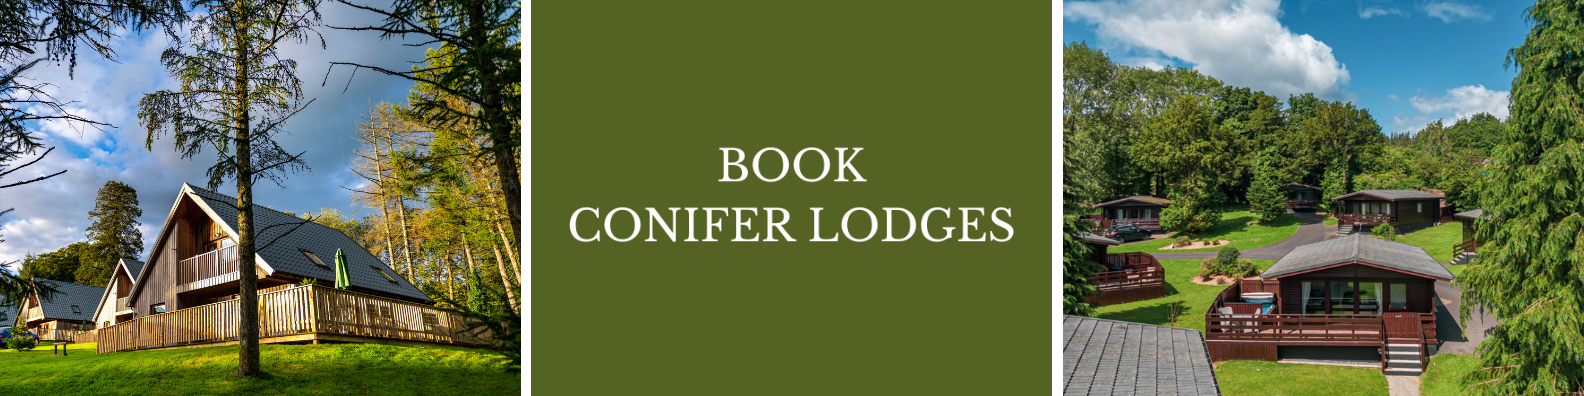 Book Conifer Lodges